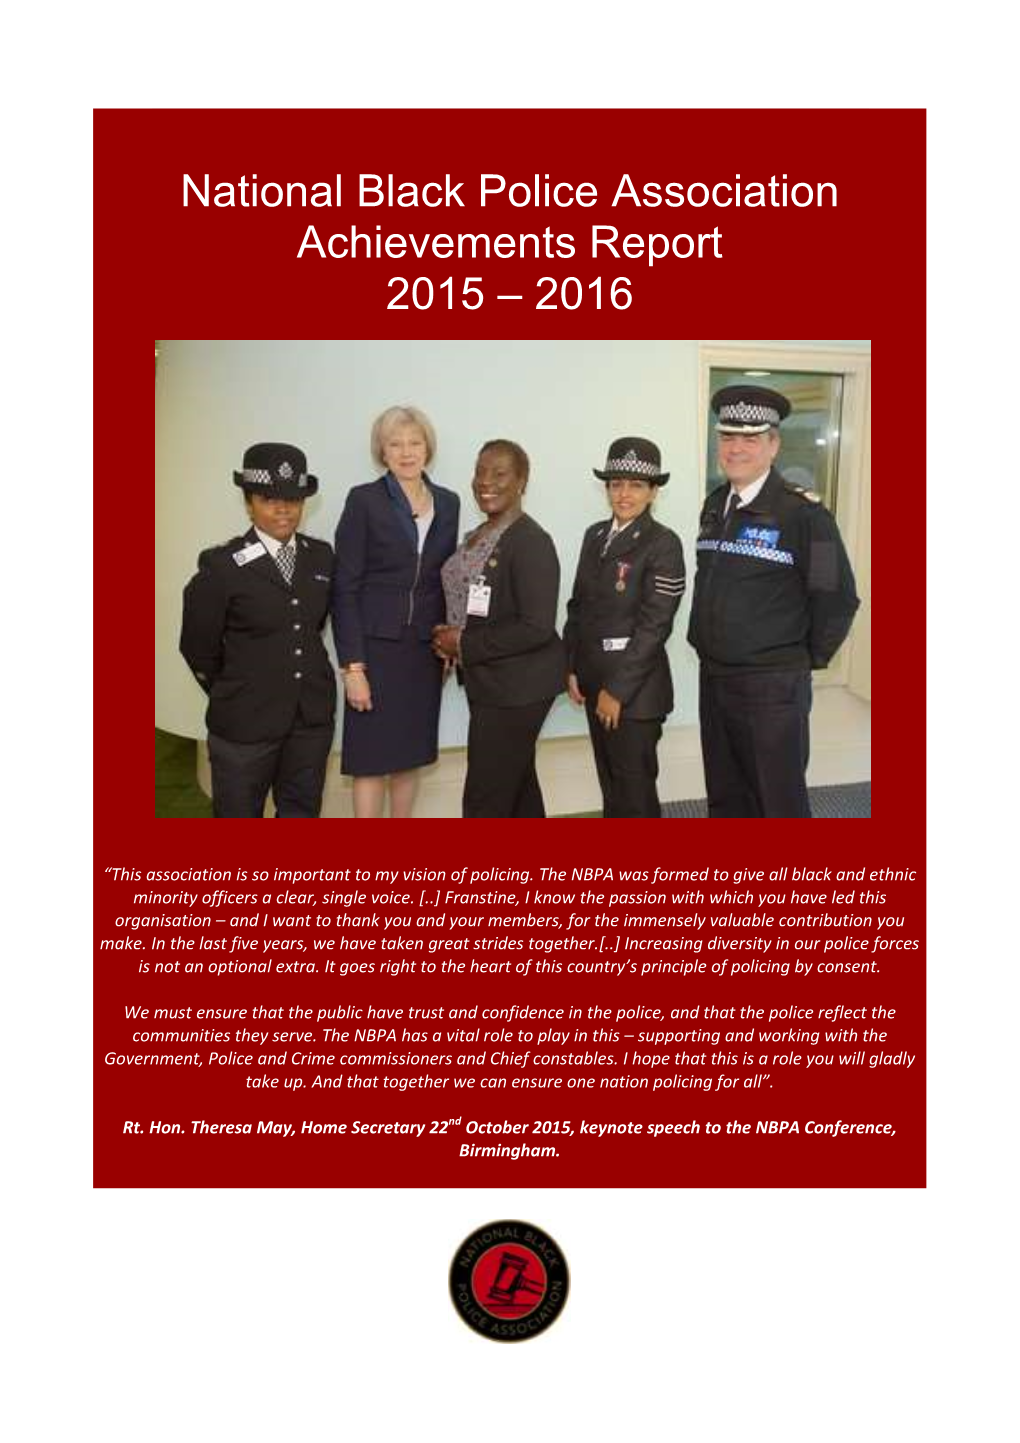 2015-2016 Achievement Report